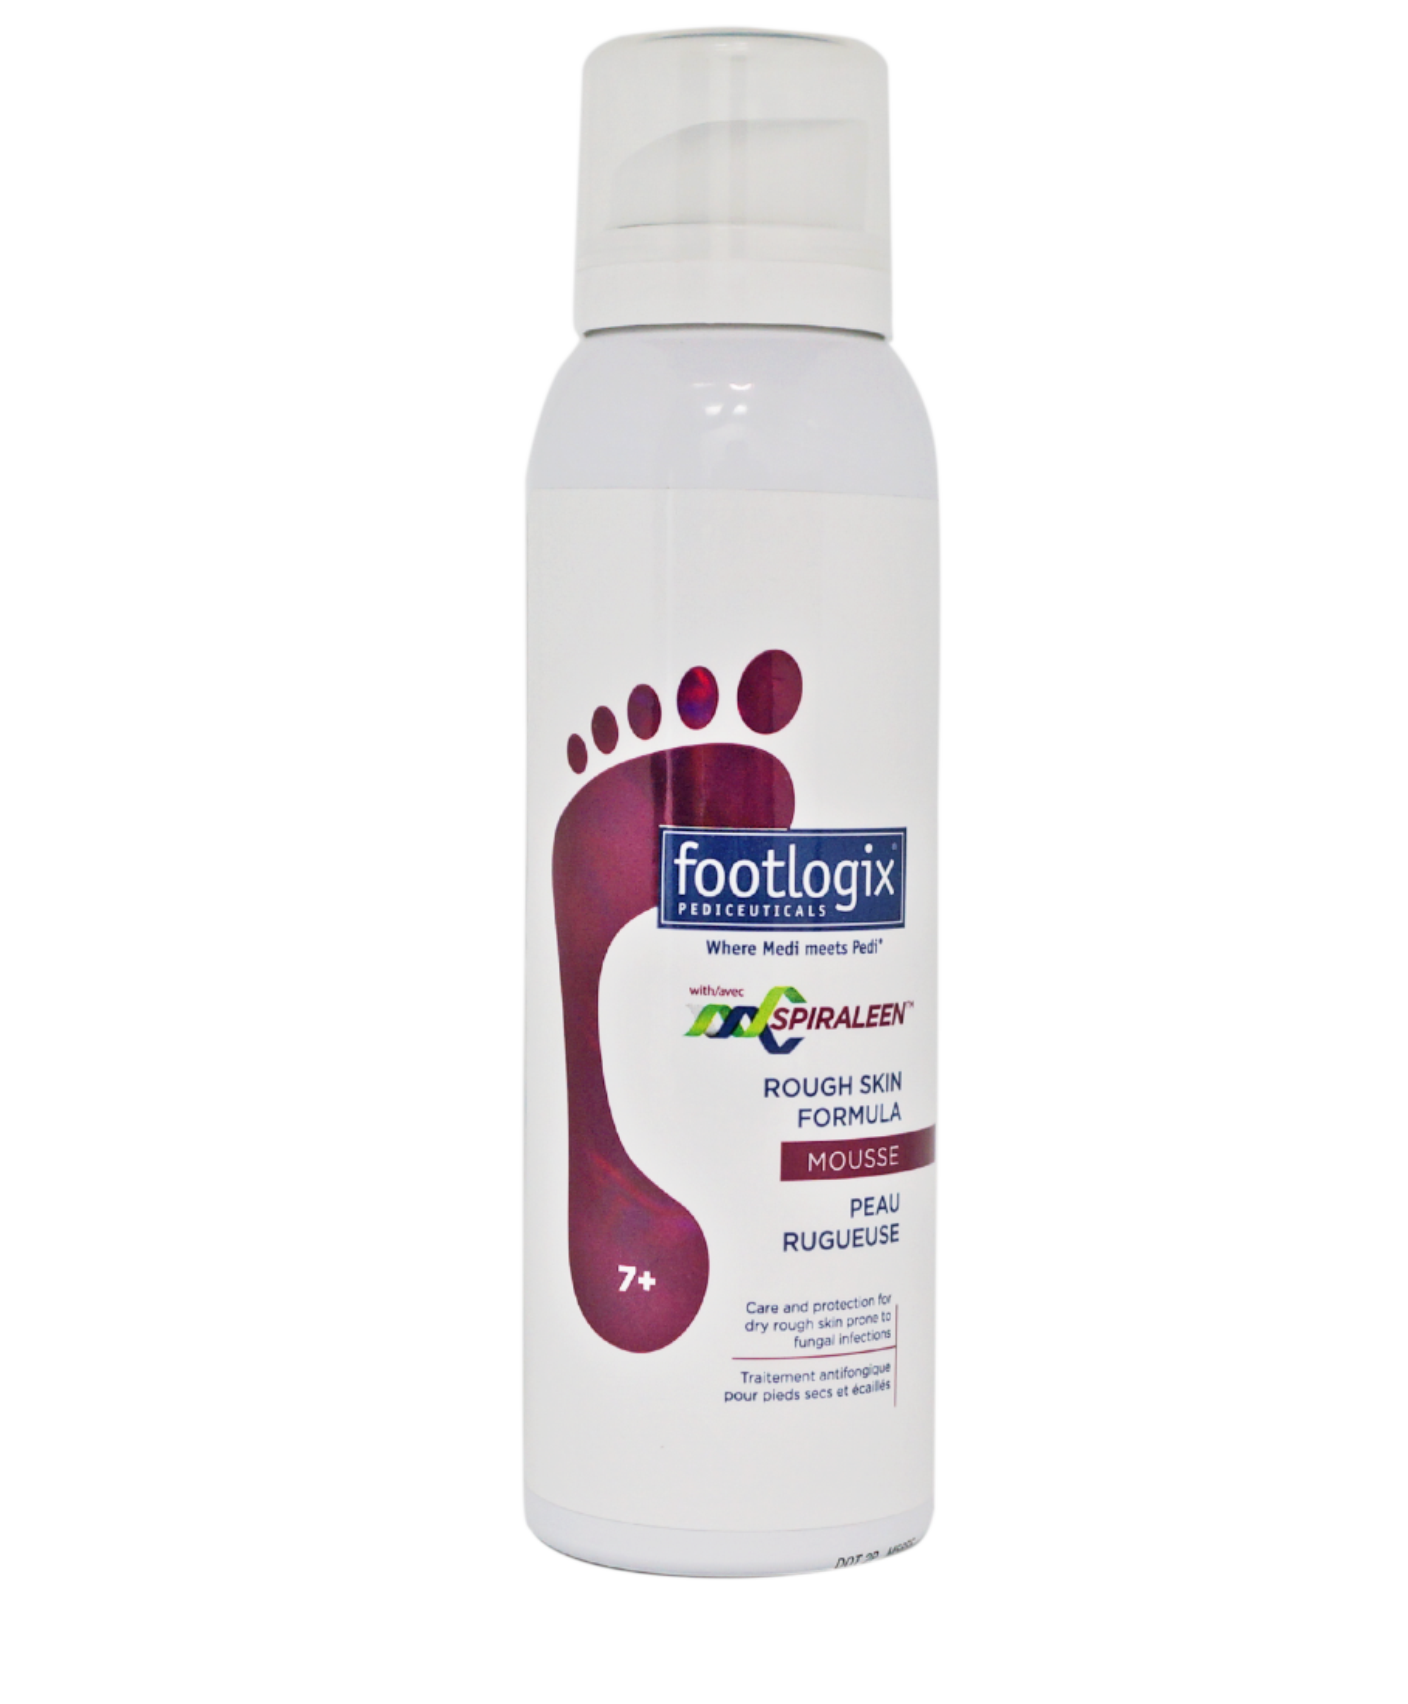 Footlogix Rough Skin Formula With SPIRALEEN, 125ml/4.2oz